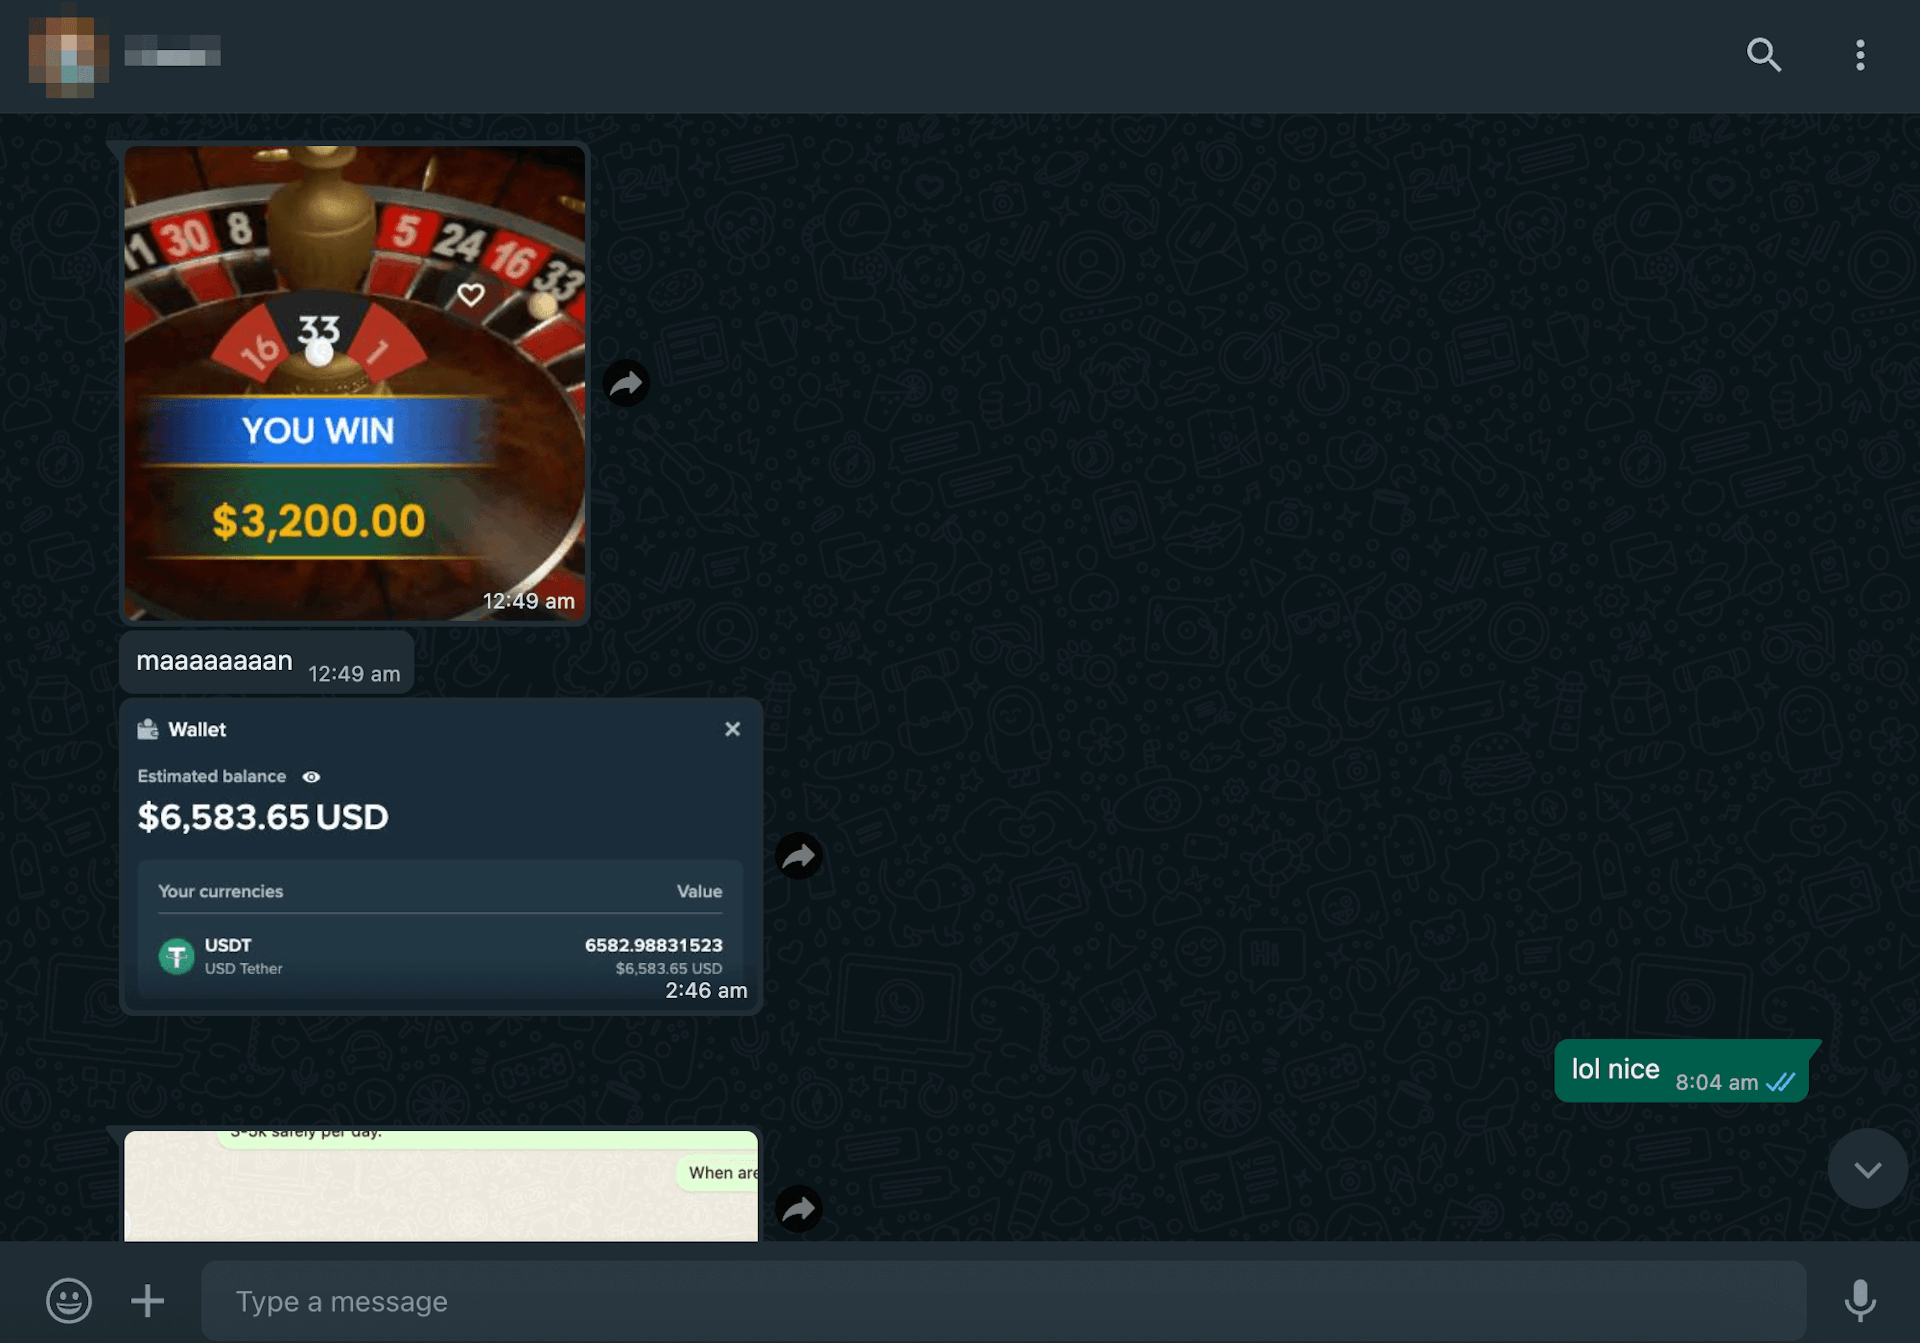 friend winning in roulette table by using luckyfeeling system